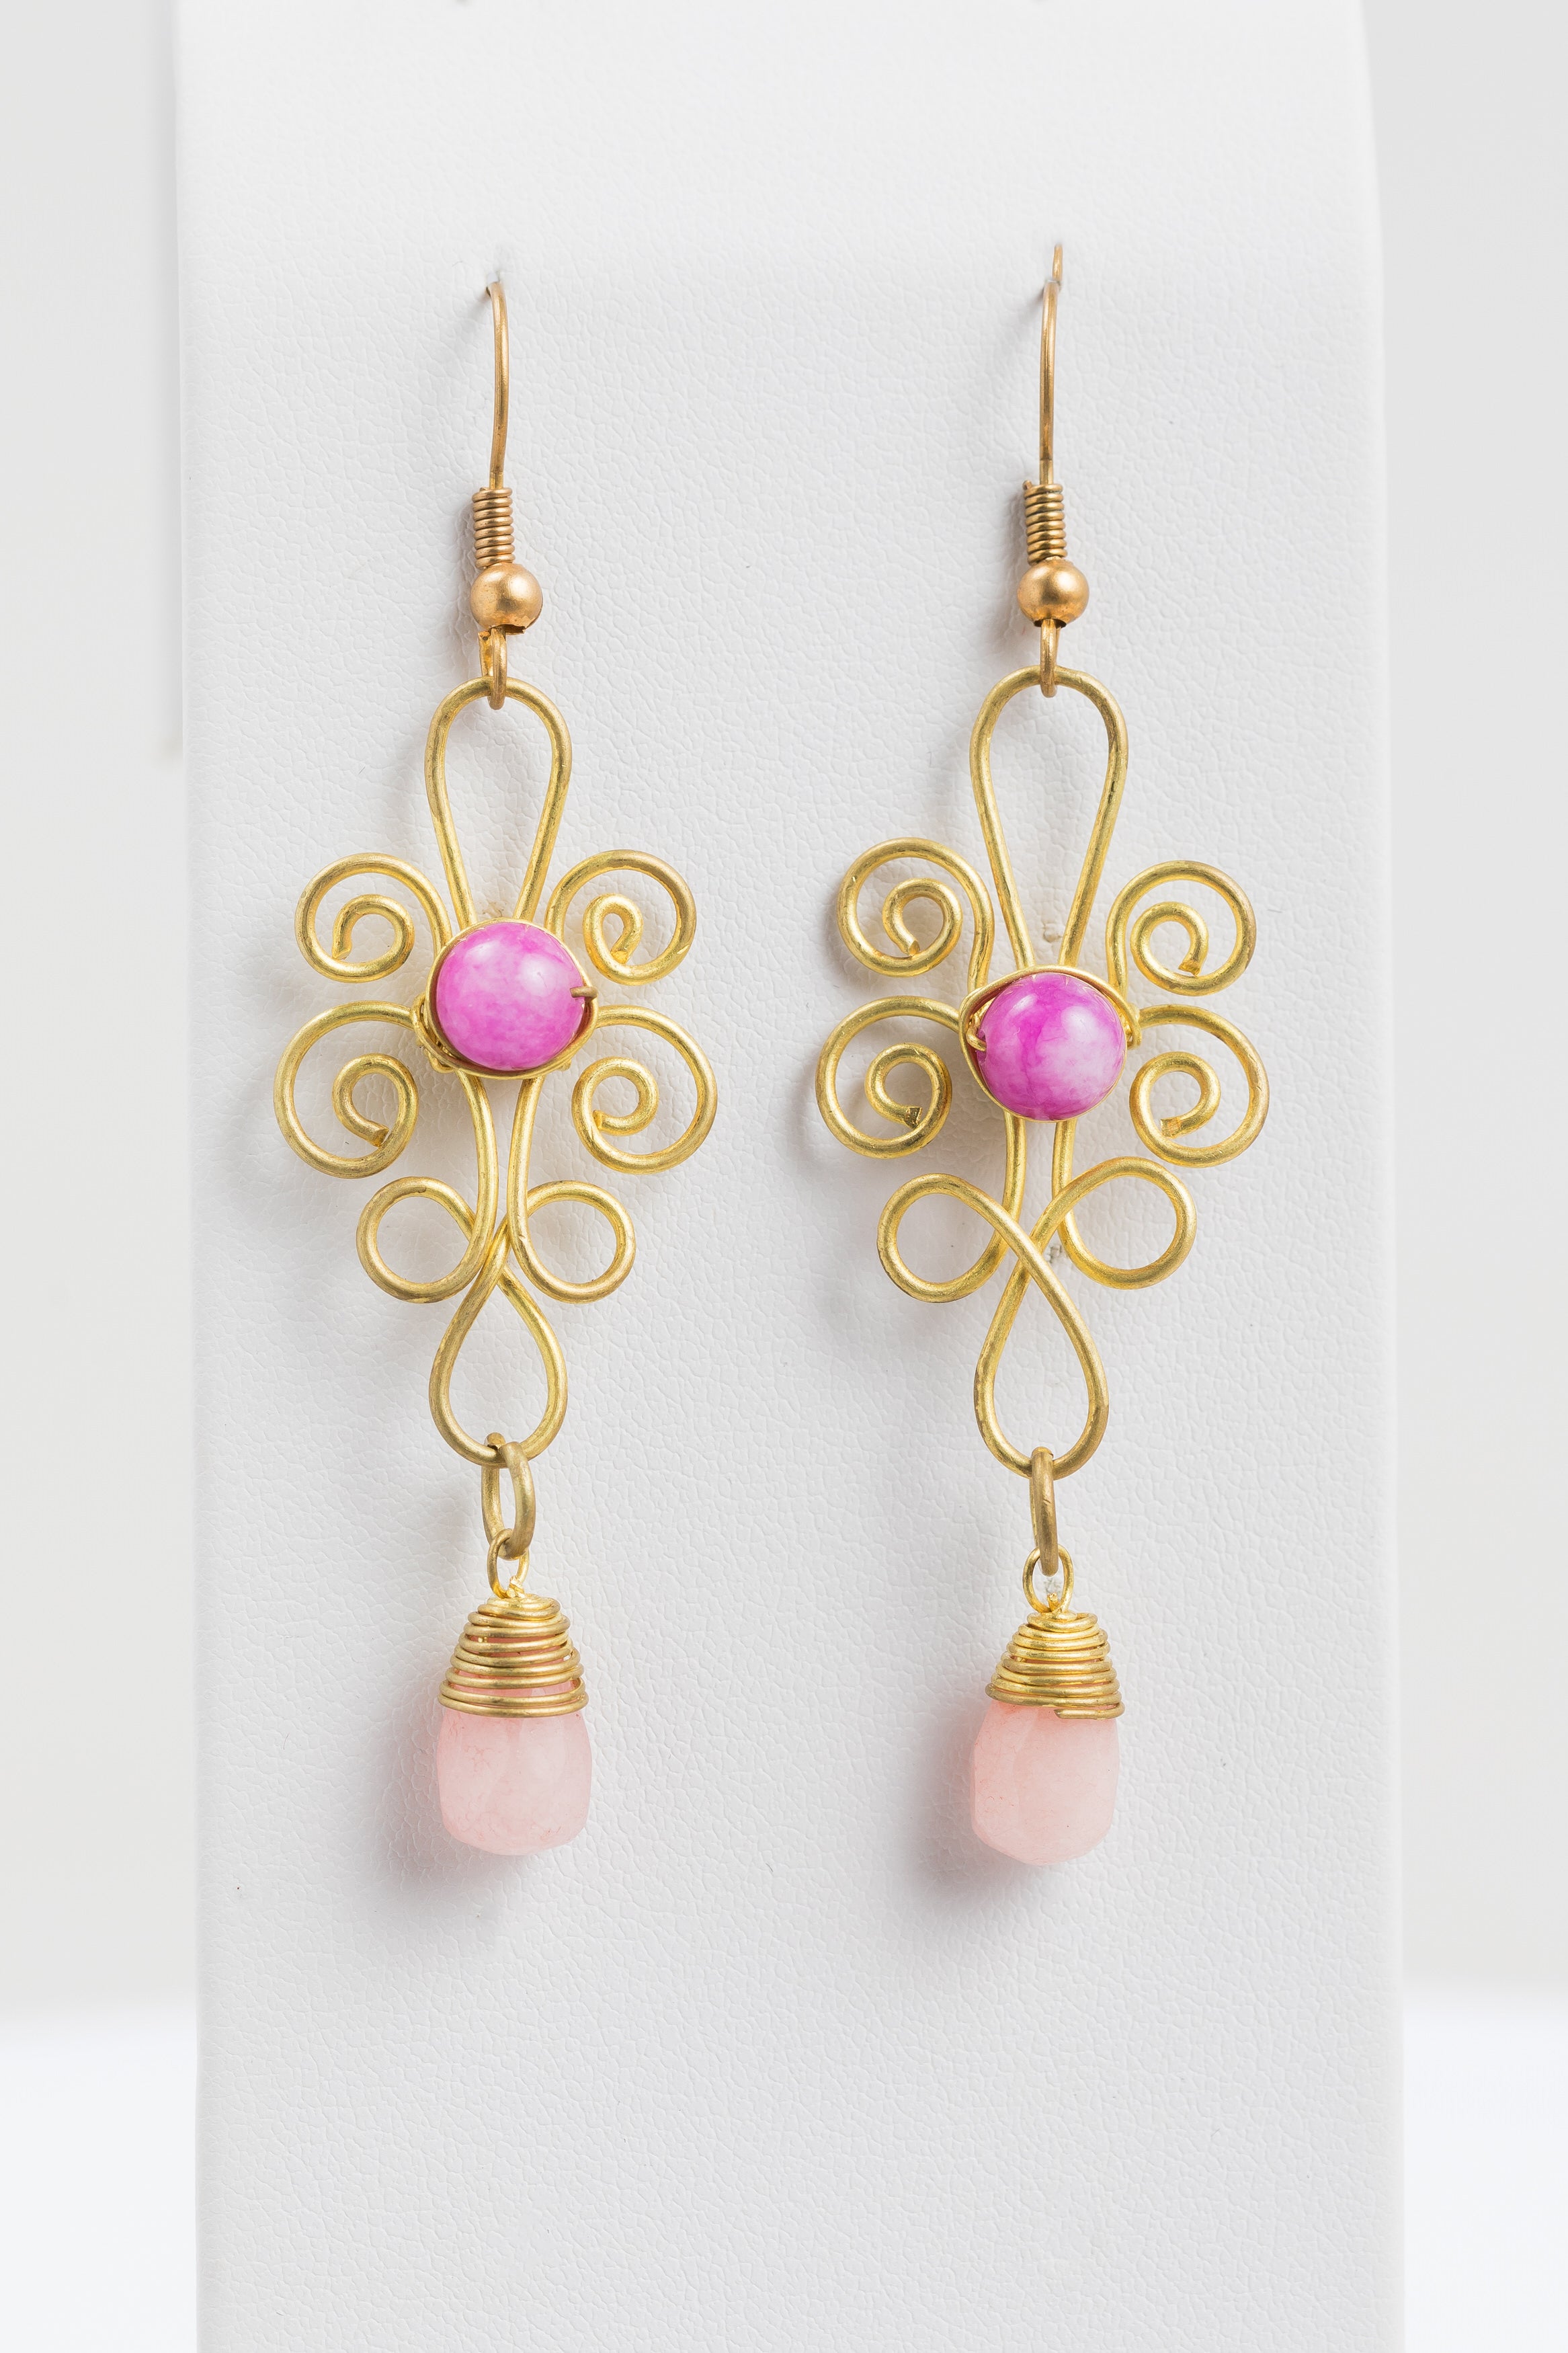 Larki Designs Gold Filagree & Pink Stone Earrings